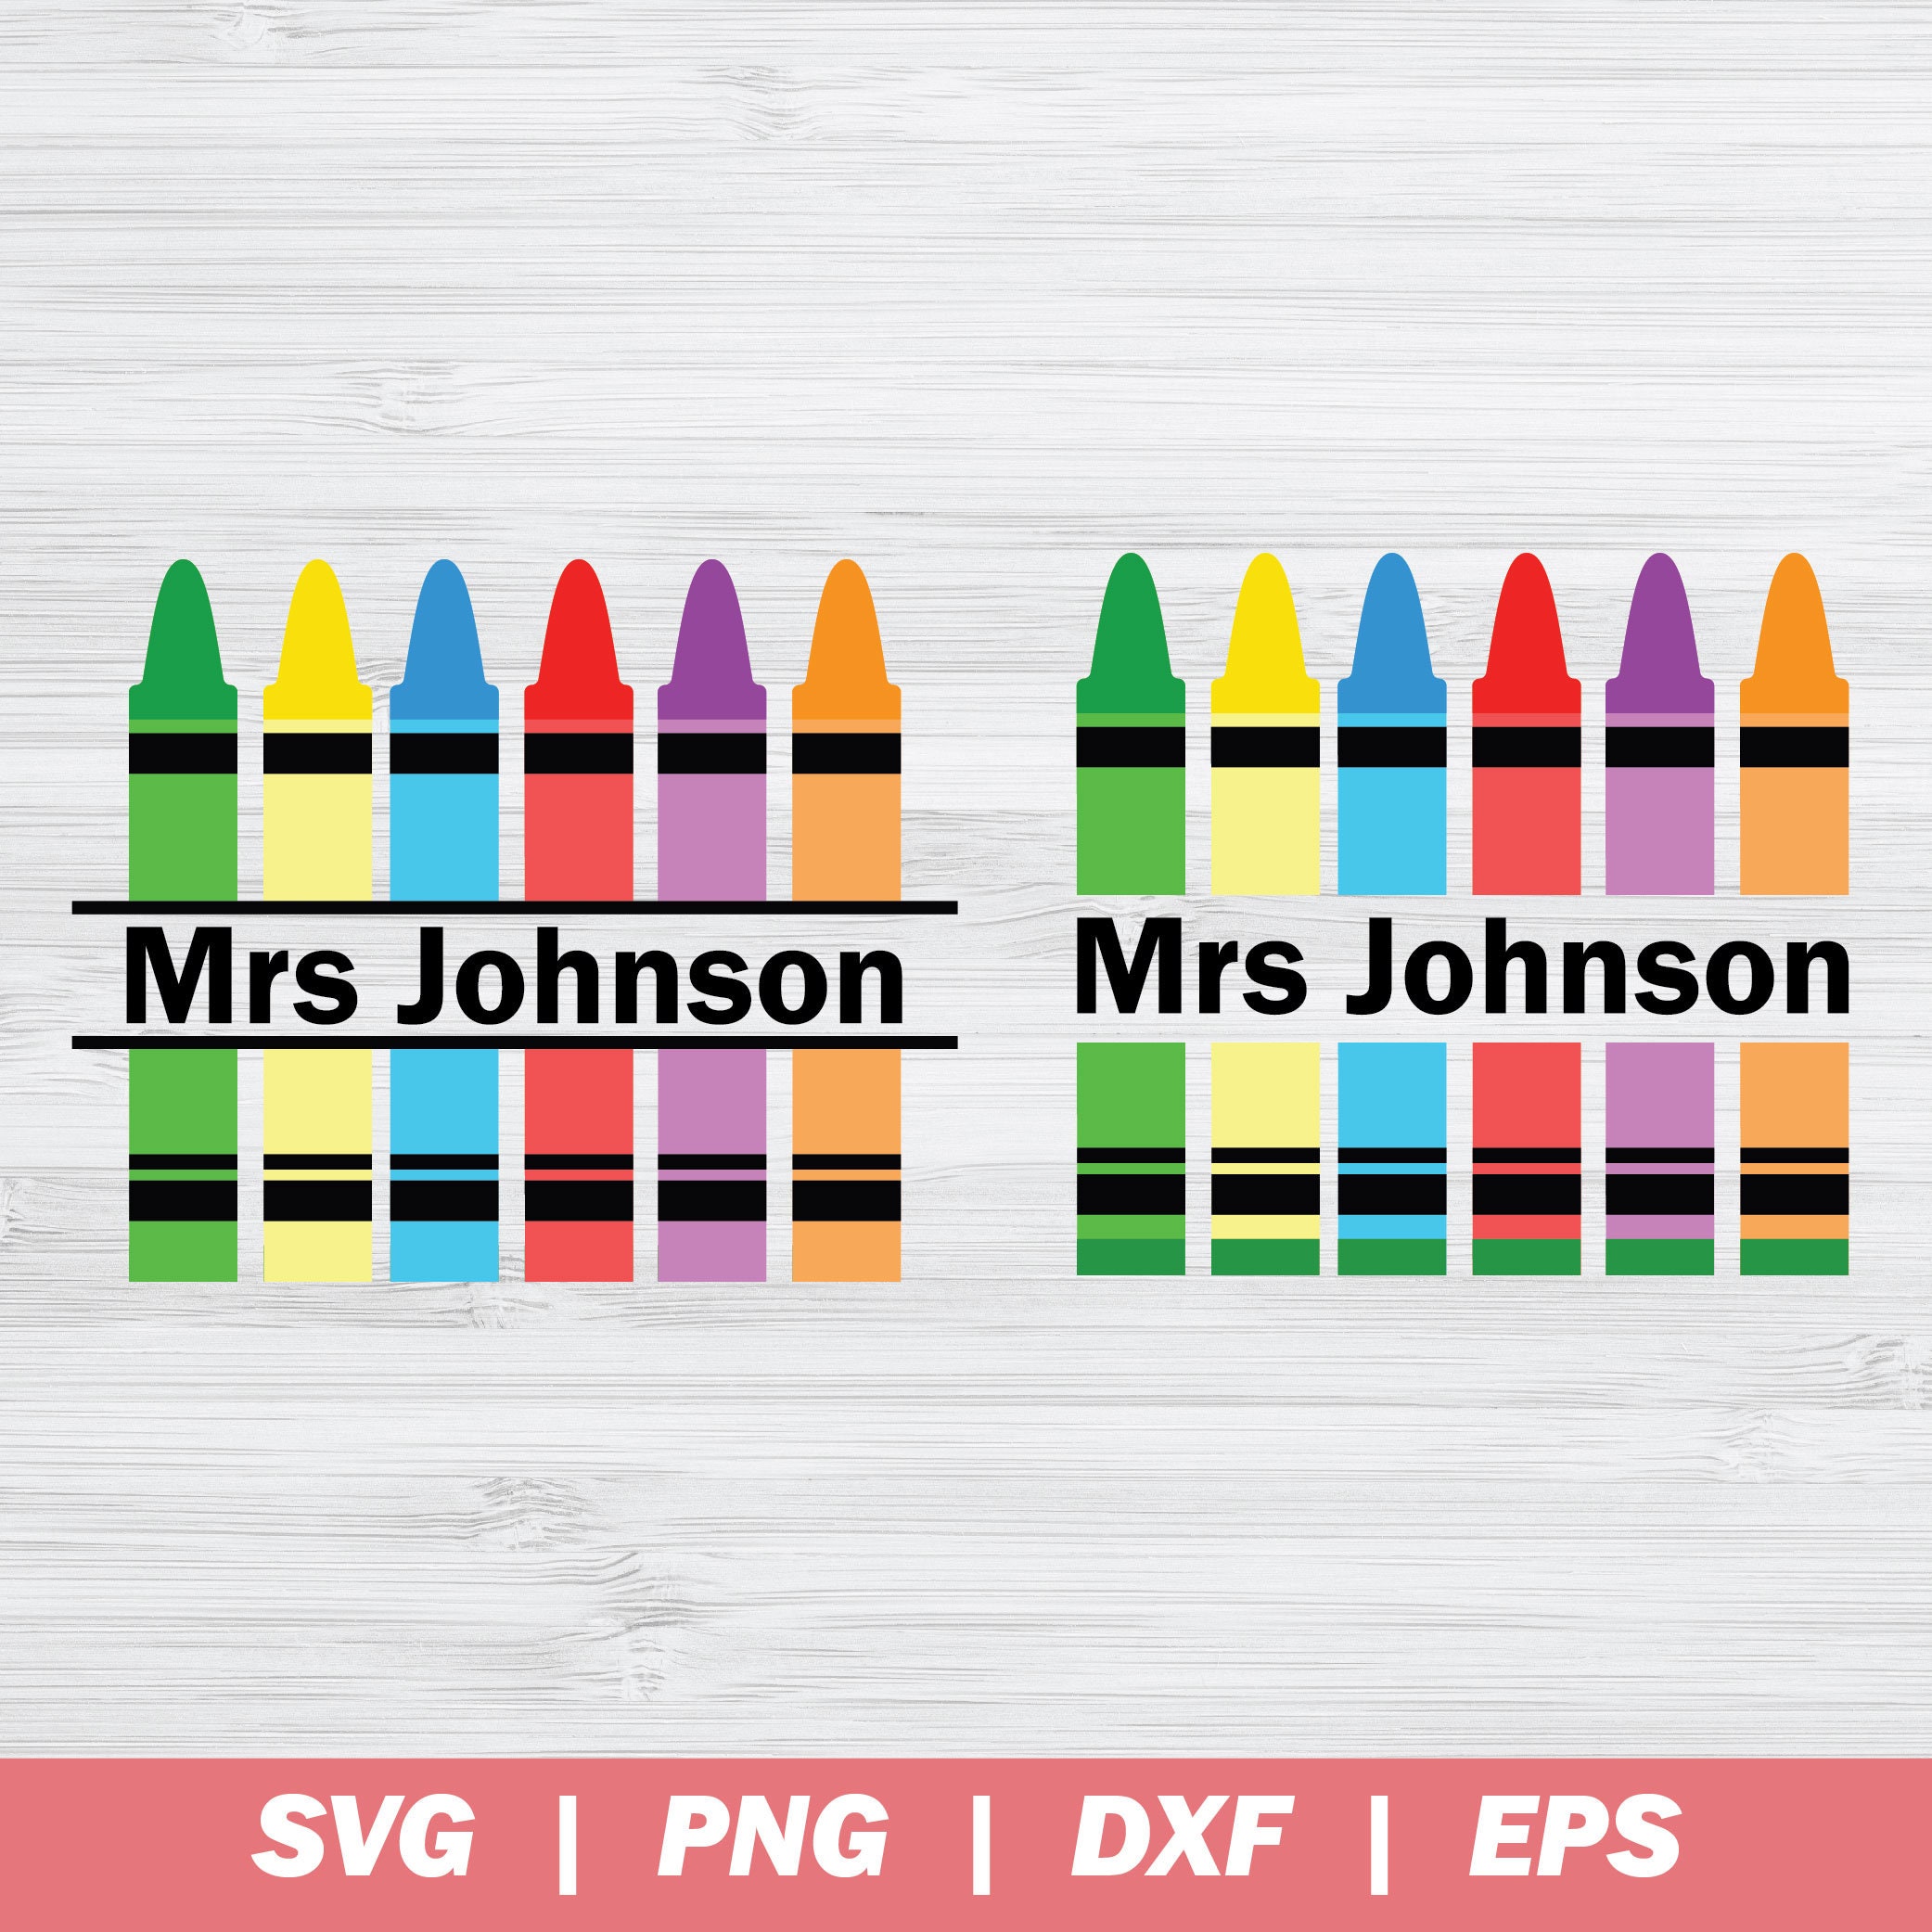 Box of Crayons SVG Craft Pattern, School SVG, Teacher SVG, Crayon